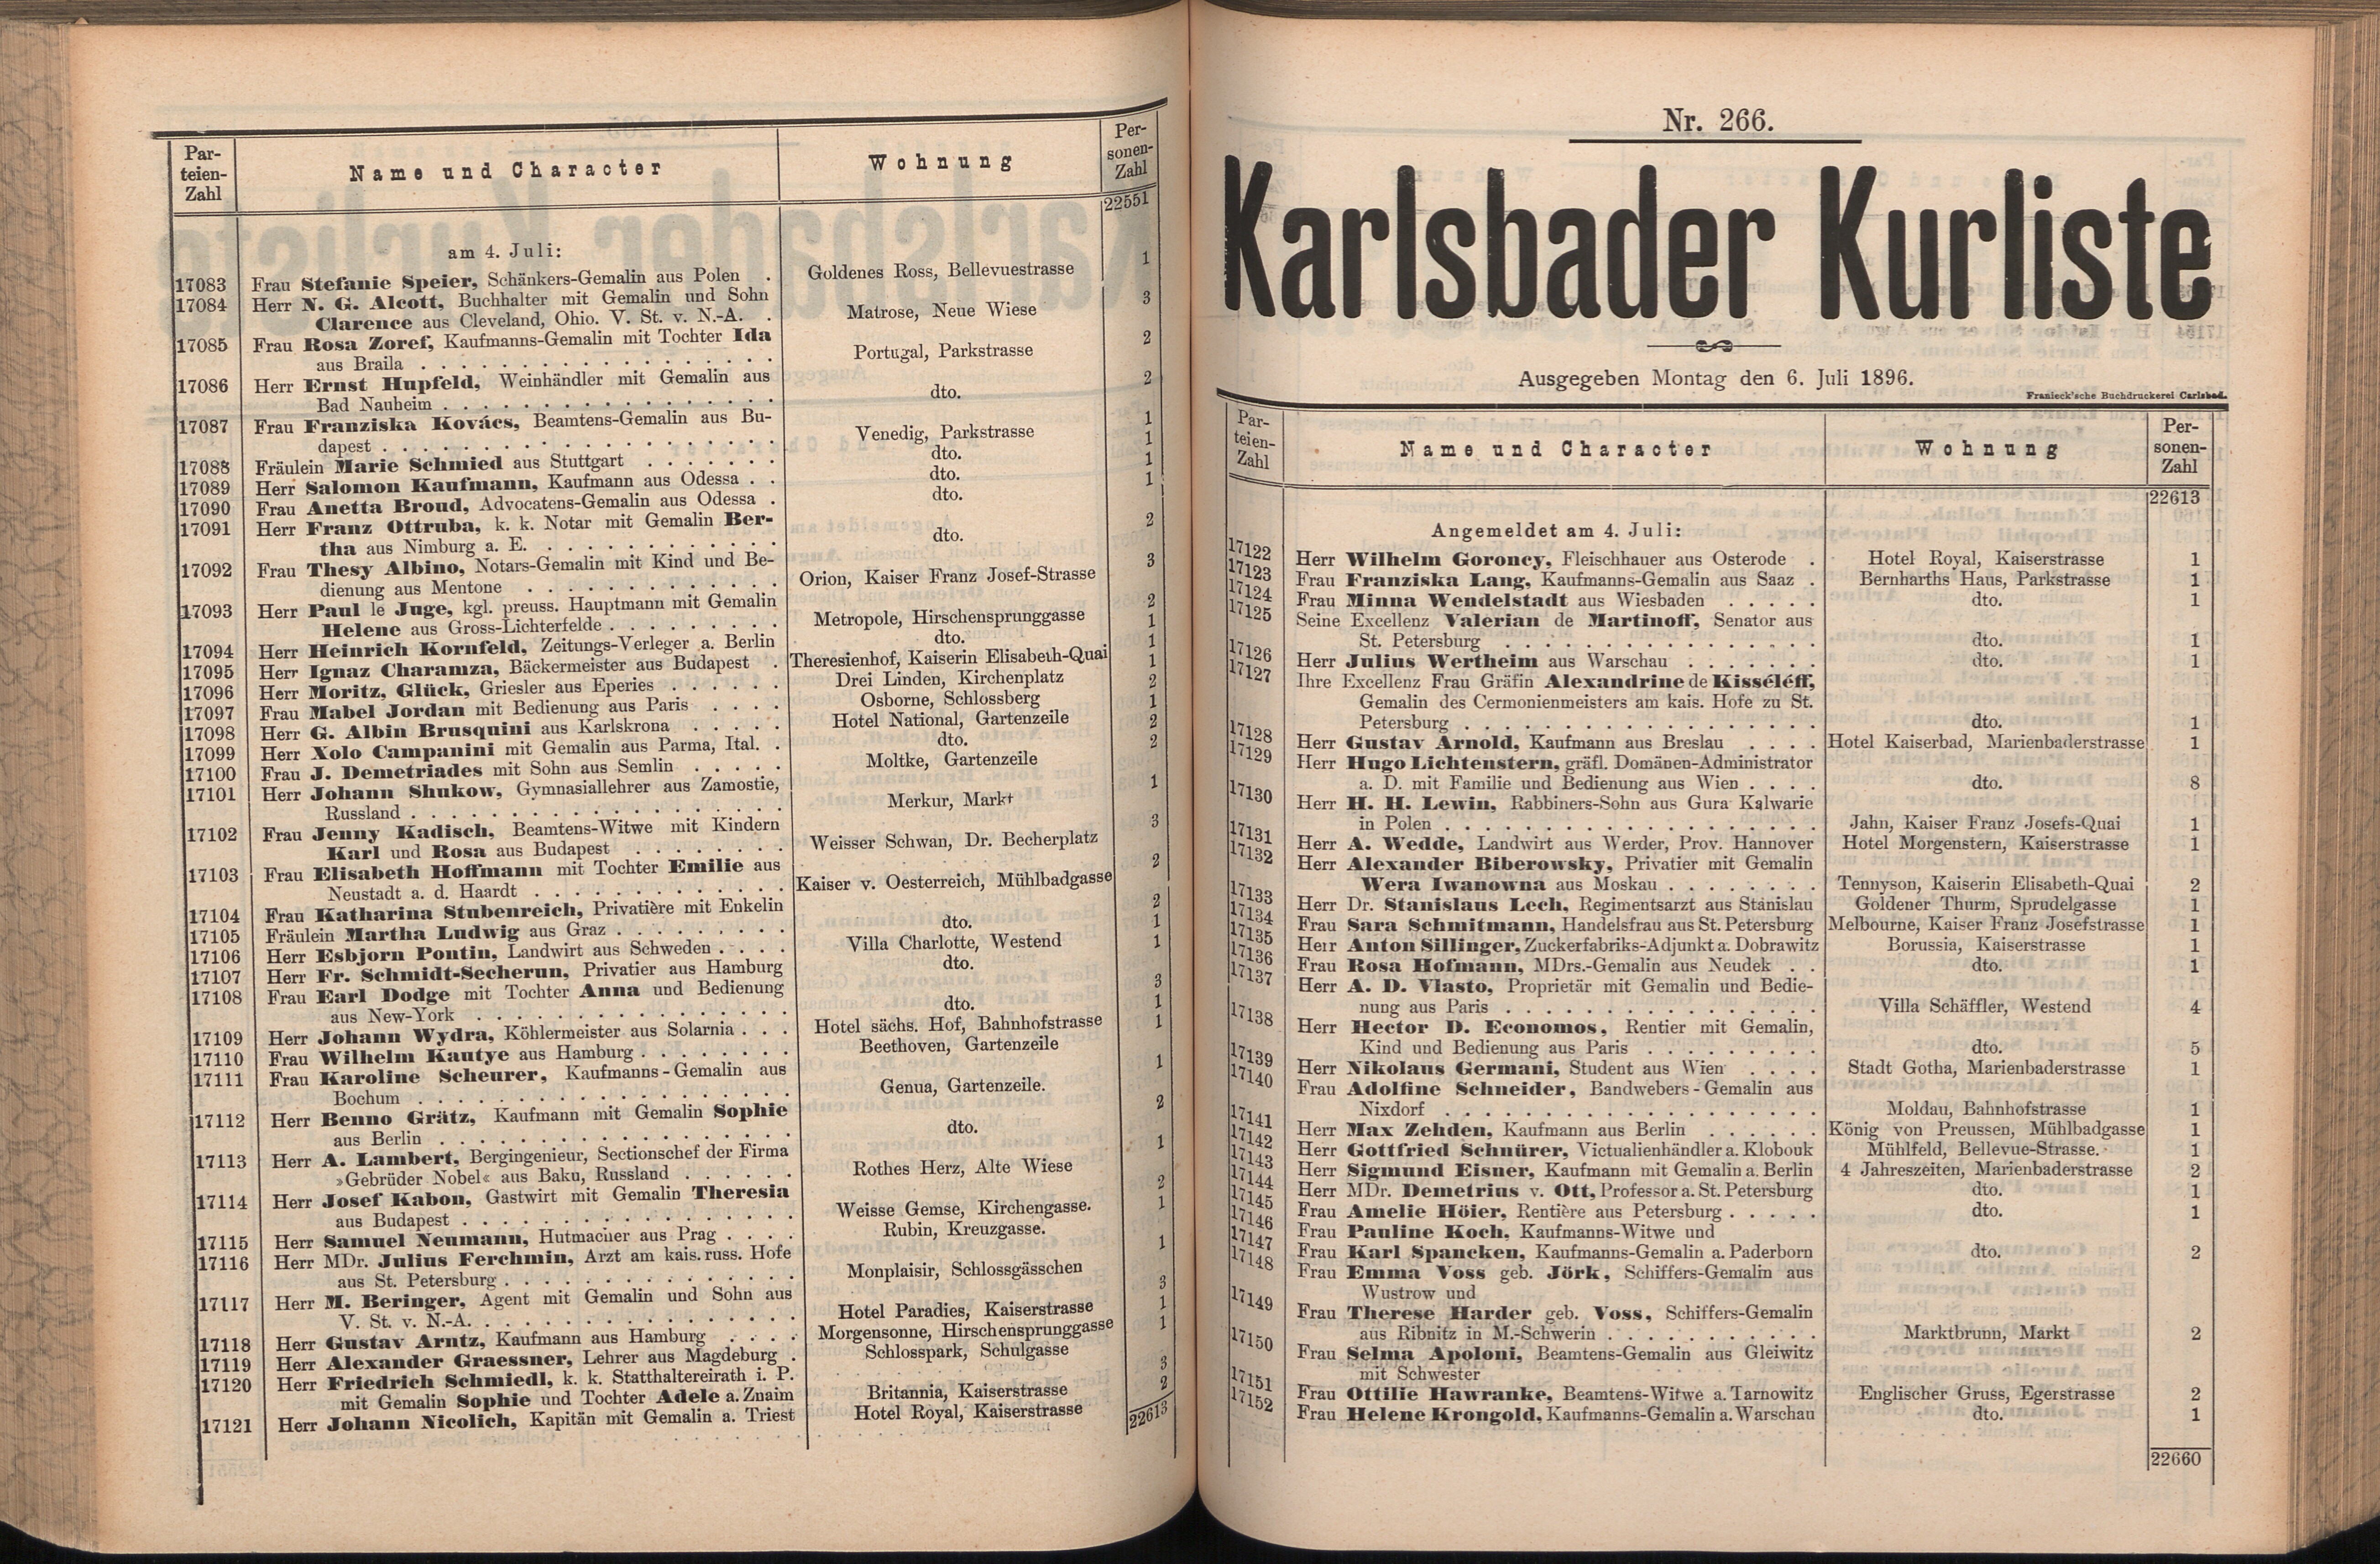 338. soap-kv_knihovna_karlsbader-kurliste-1896_3390